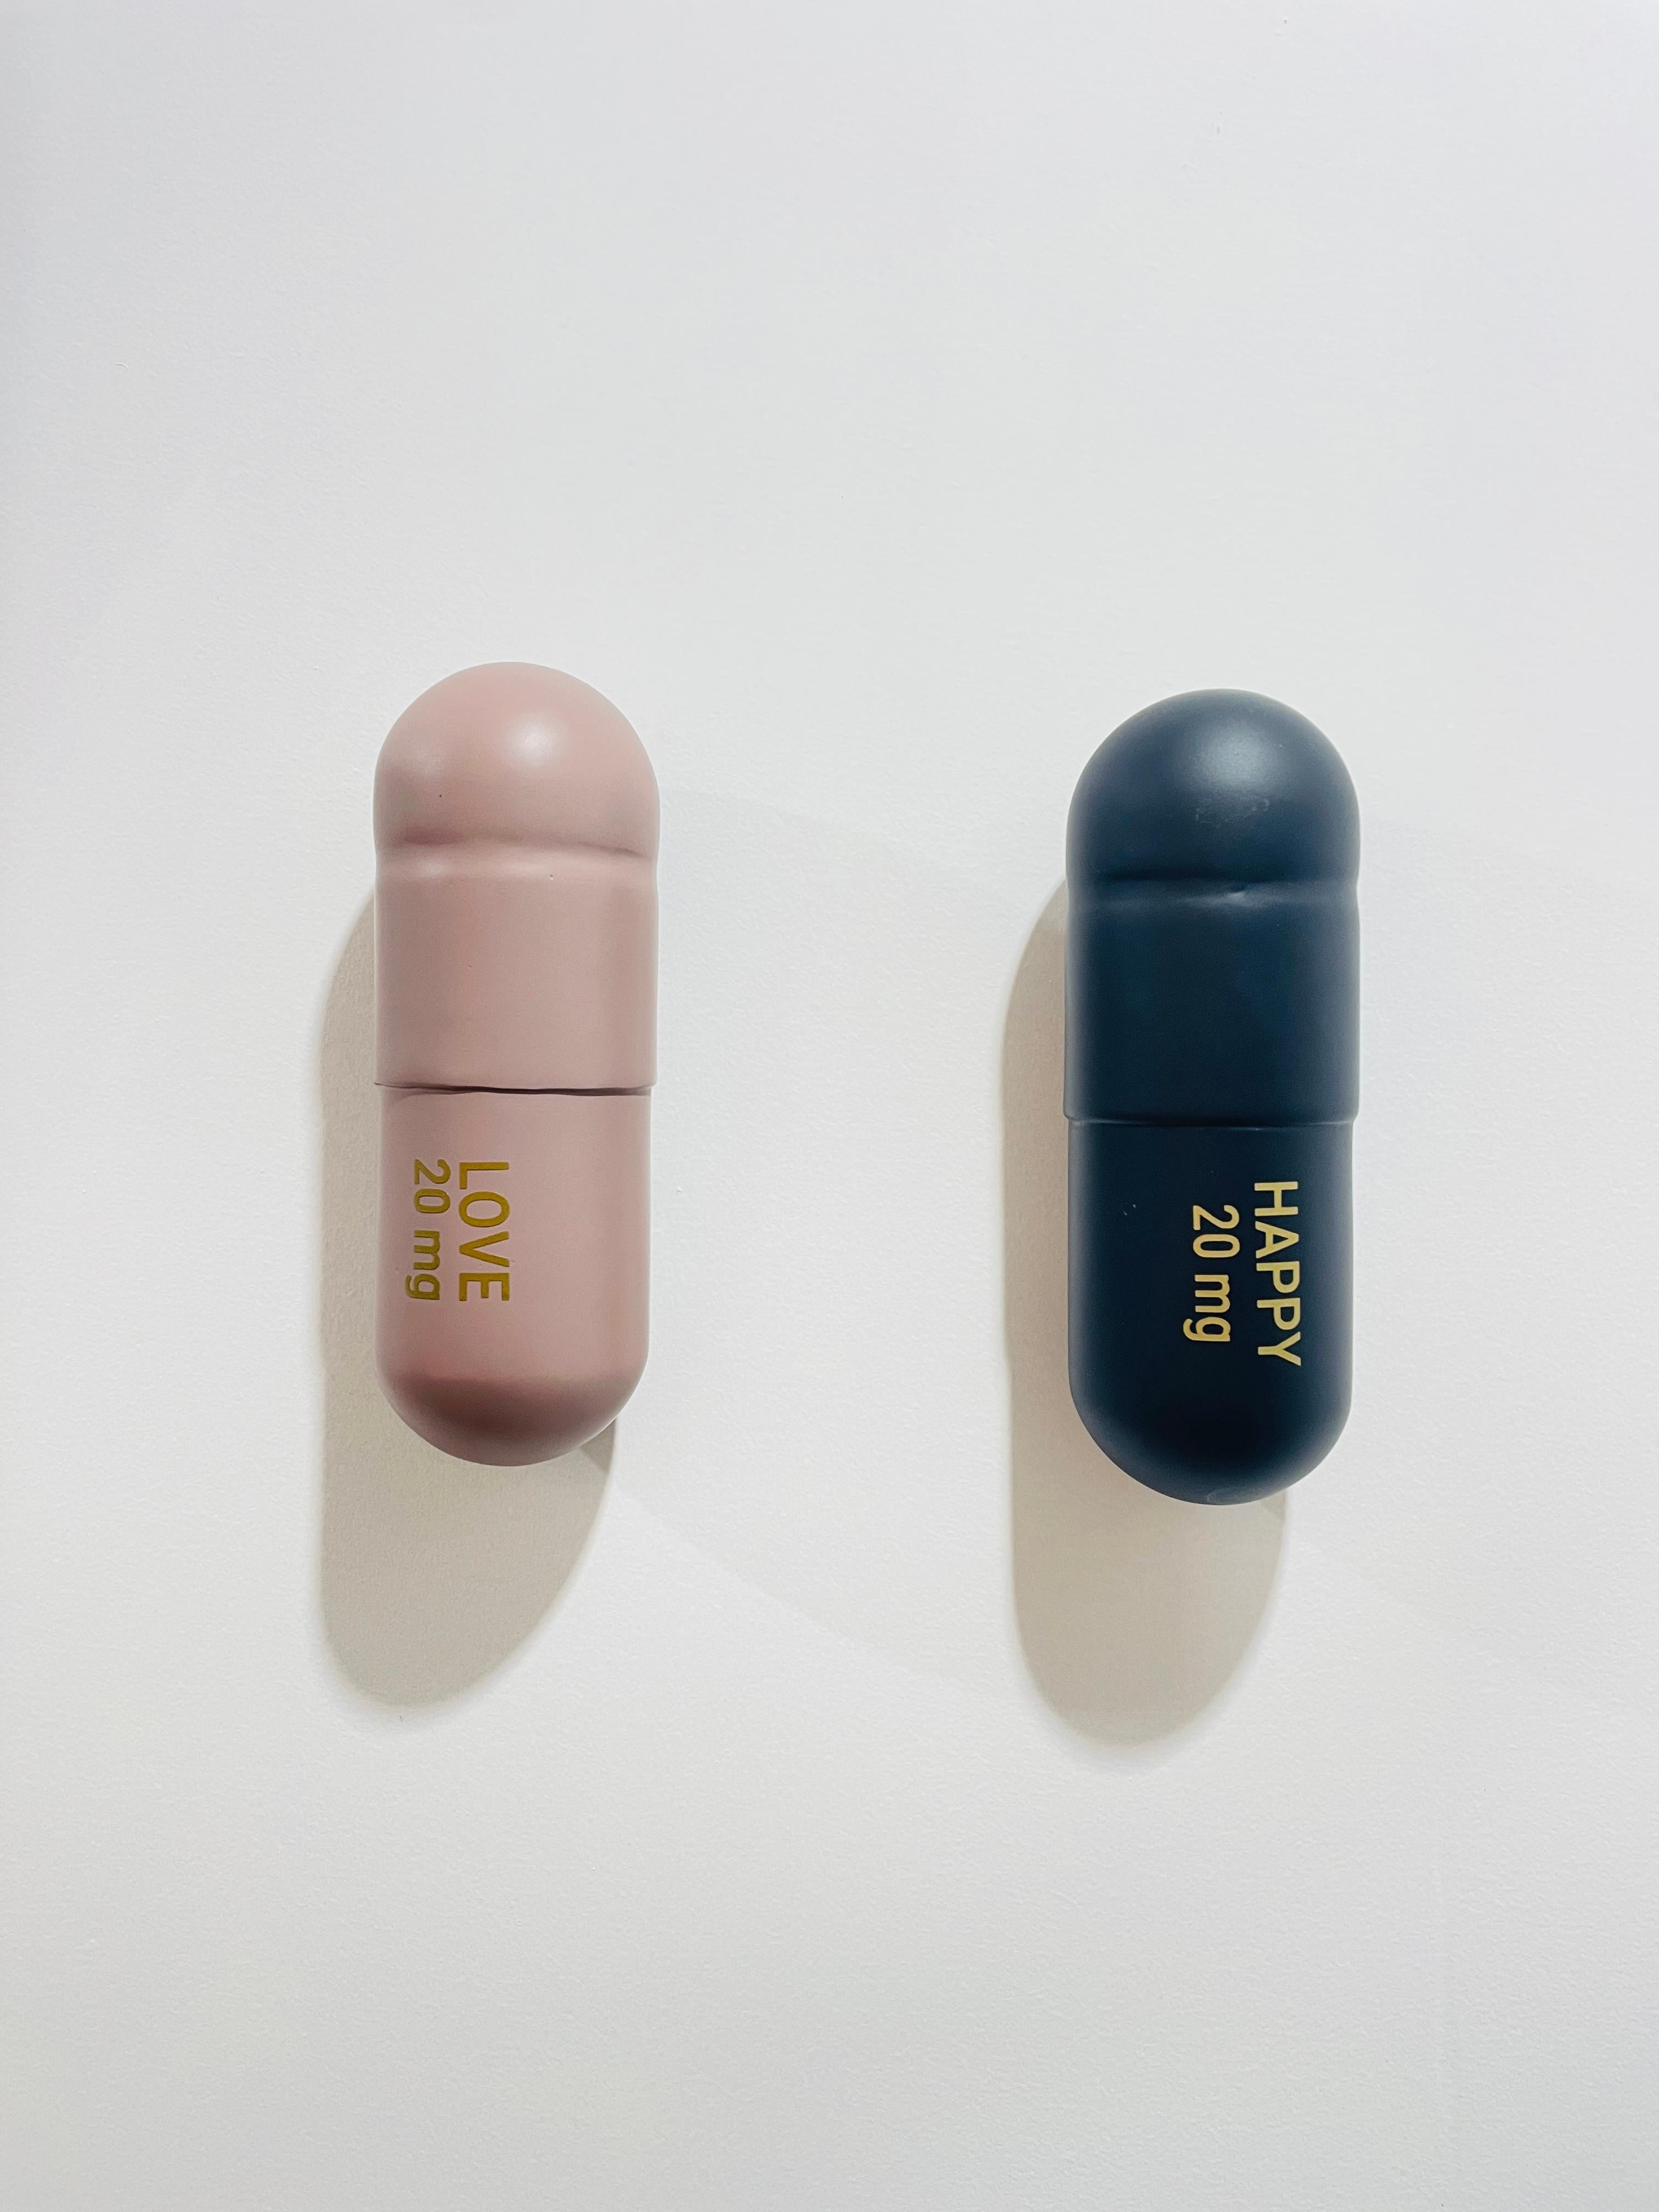 Tal Nehoray Still-Life Sculpture - 20 ML Love Happy pill Combo (Matte Black and powder pink) - figurative sculpture